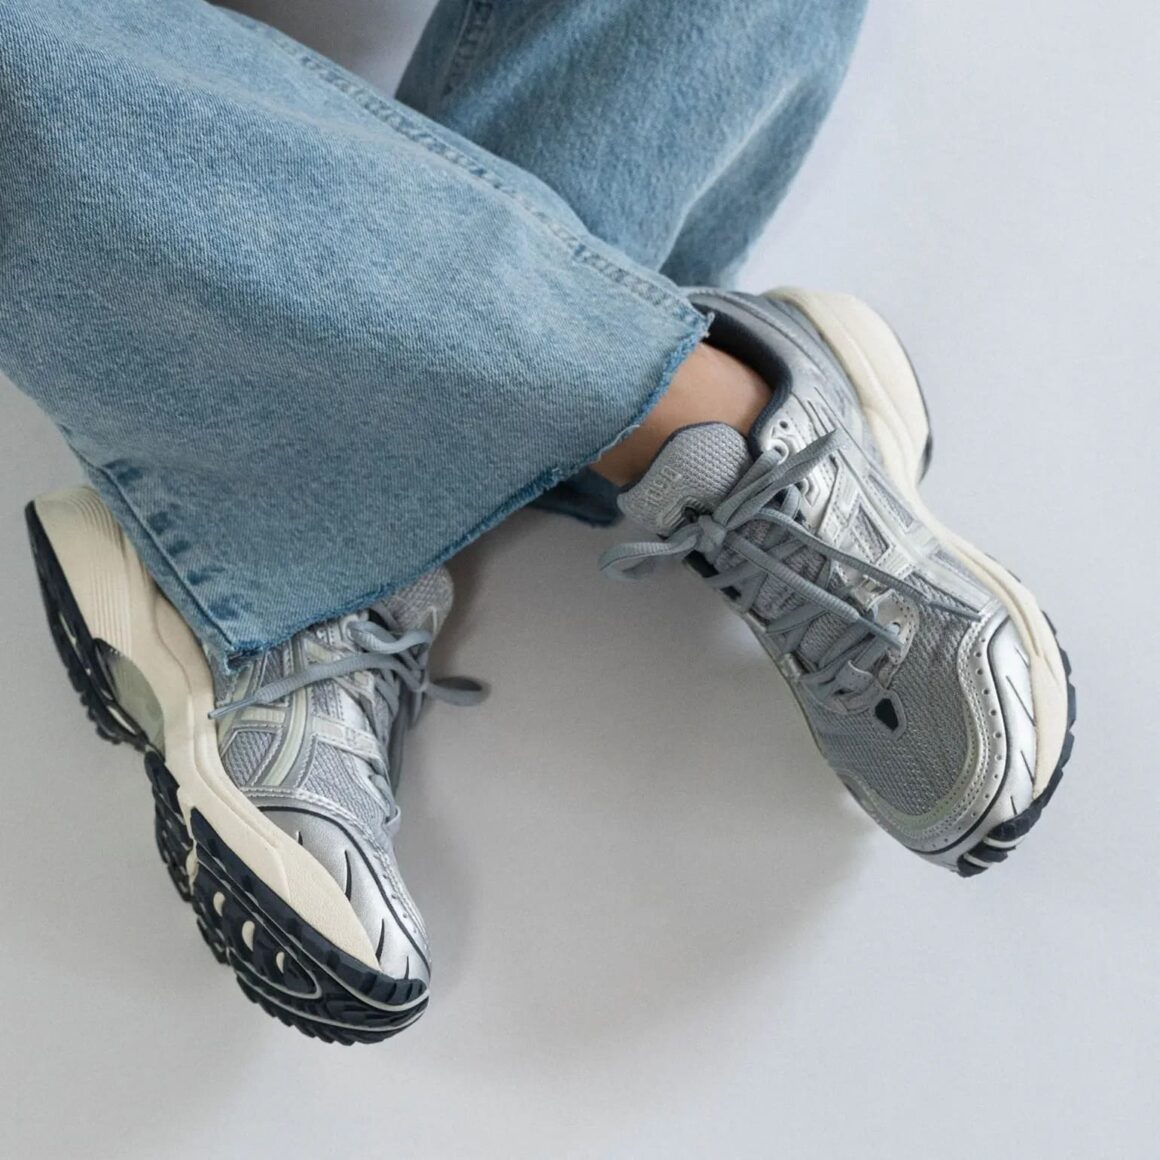 Asics Gel-1090 Piedmont Grey On Feet